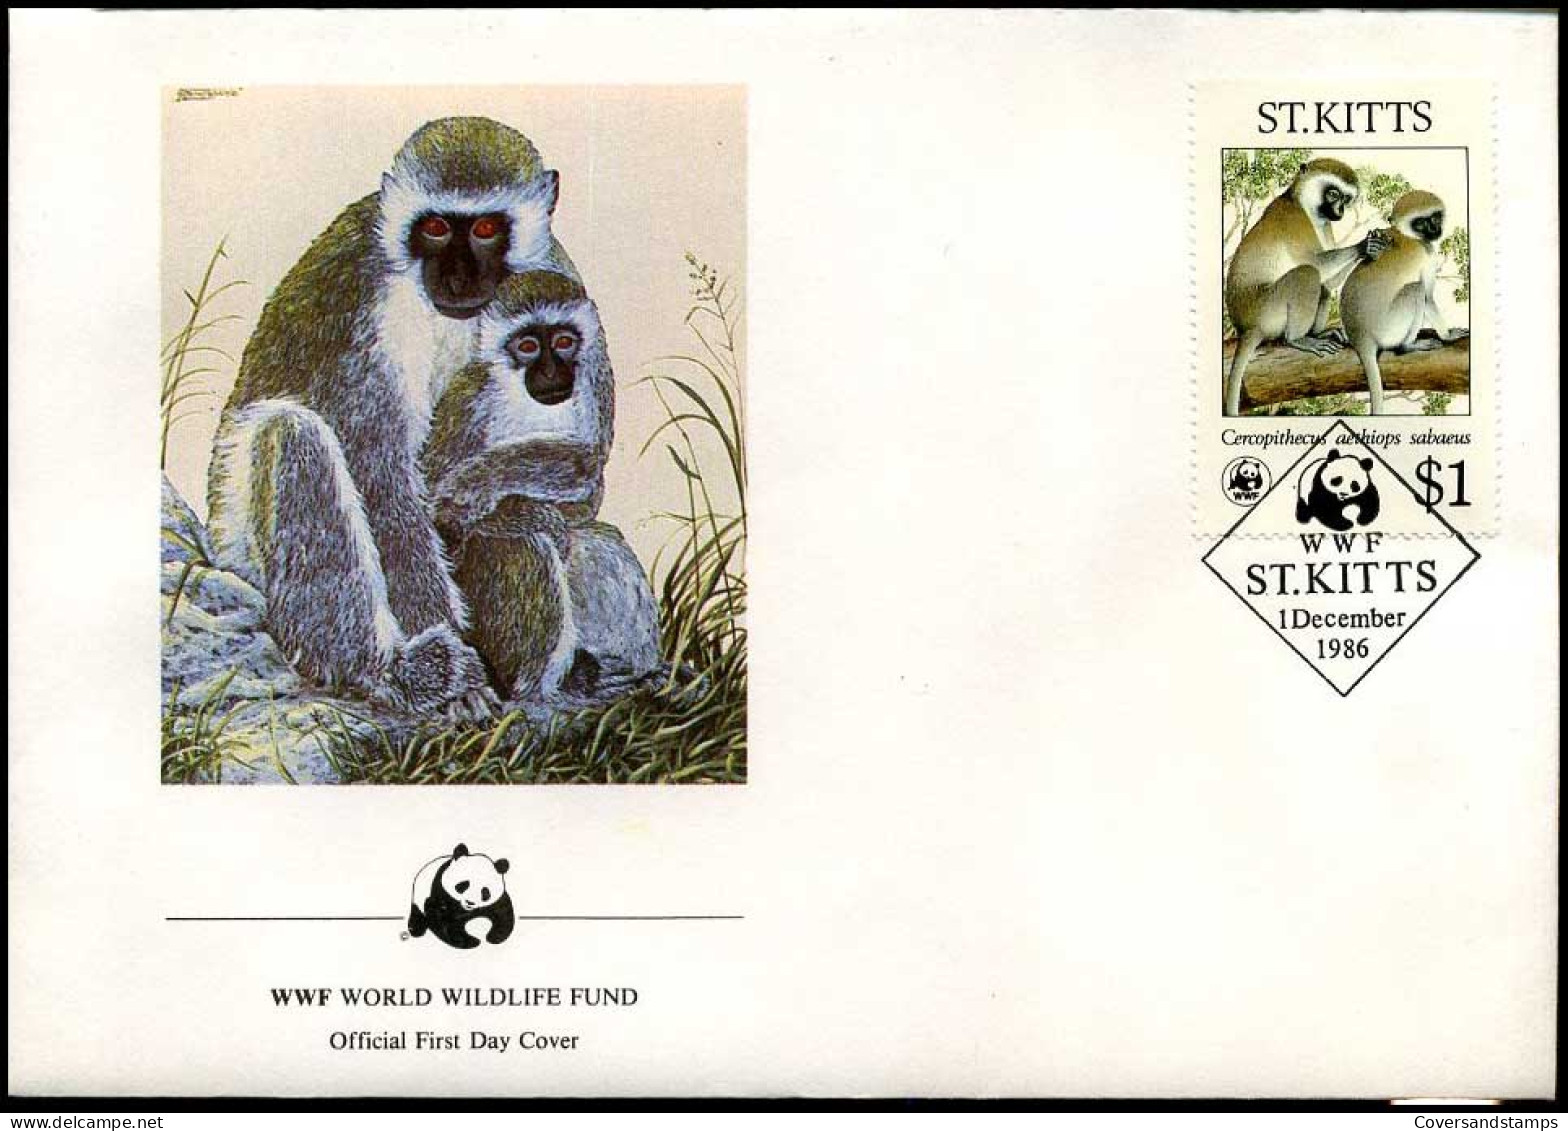 St. Kitts - FDC - Green Monkey - FDC